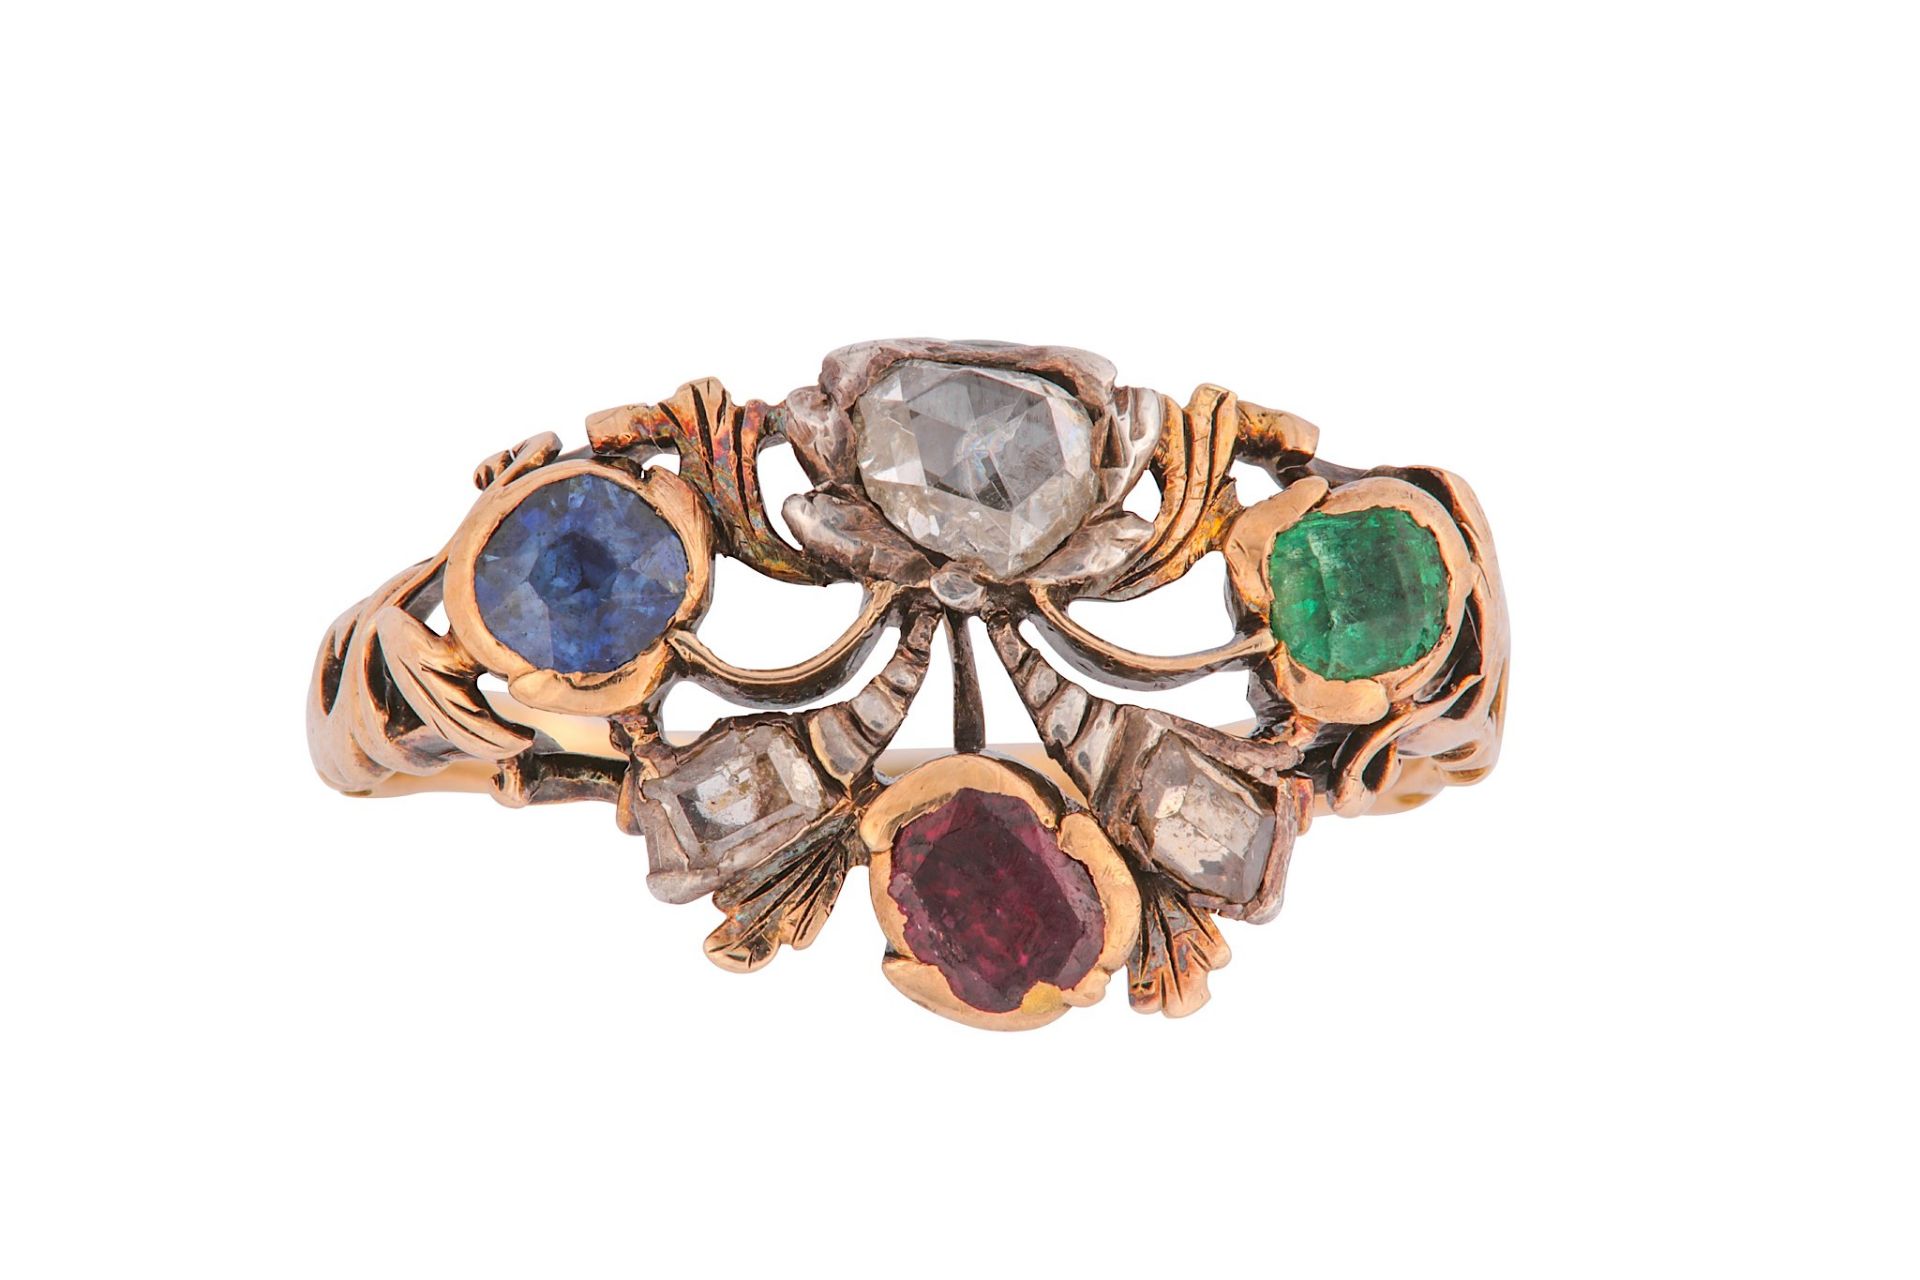 A gem-set giardinetto ring